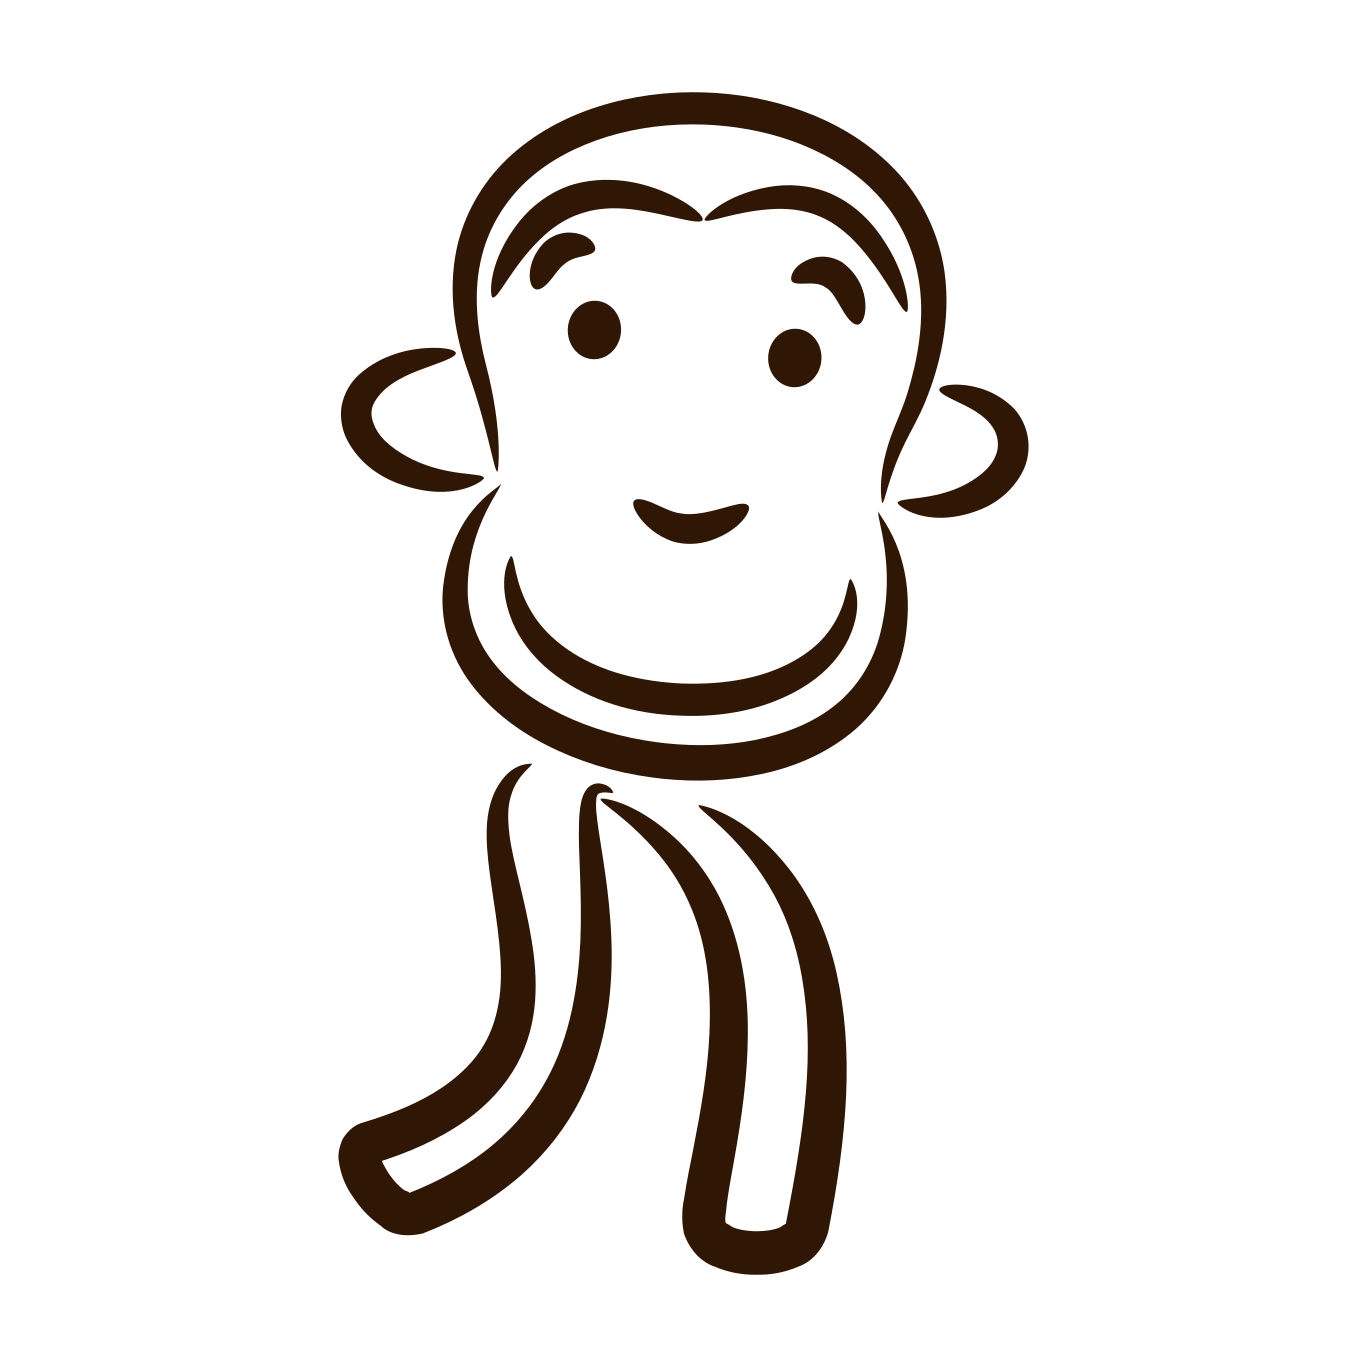 A Logo Of A Monkey